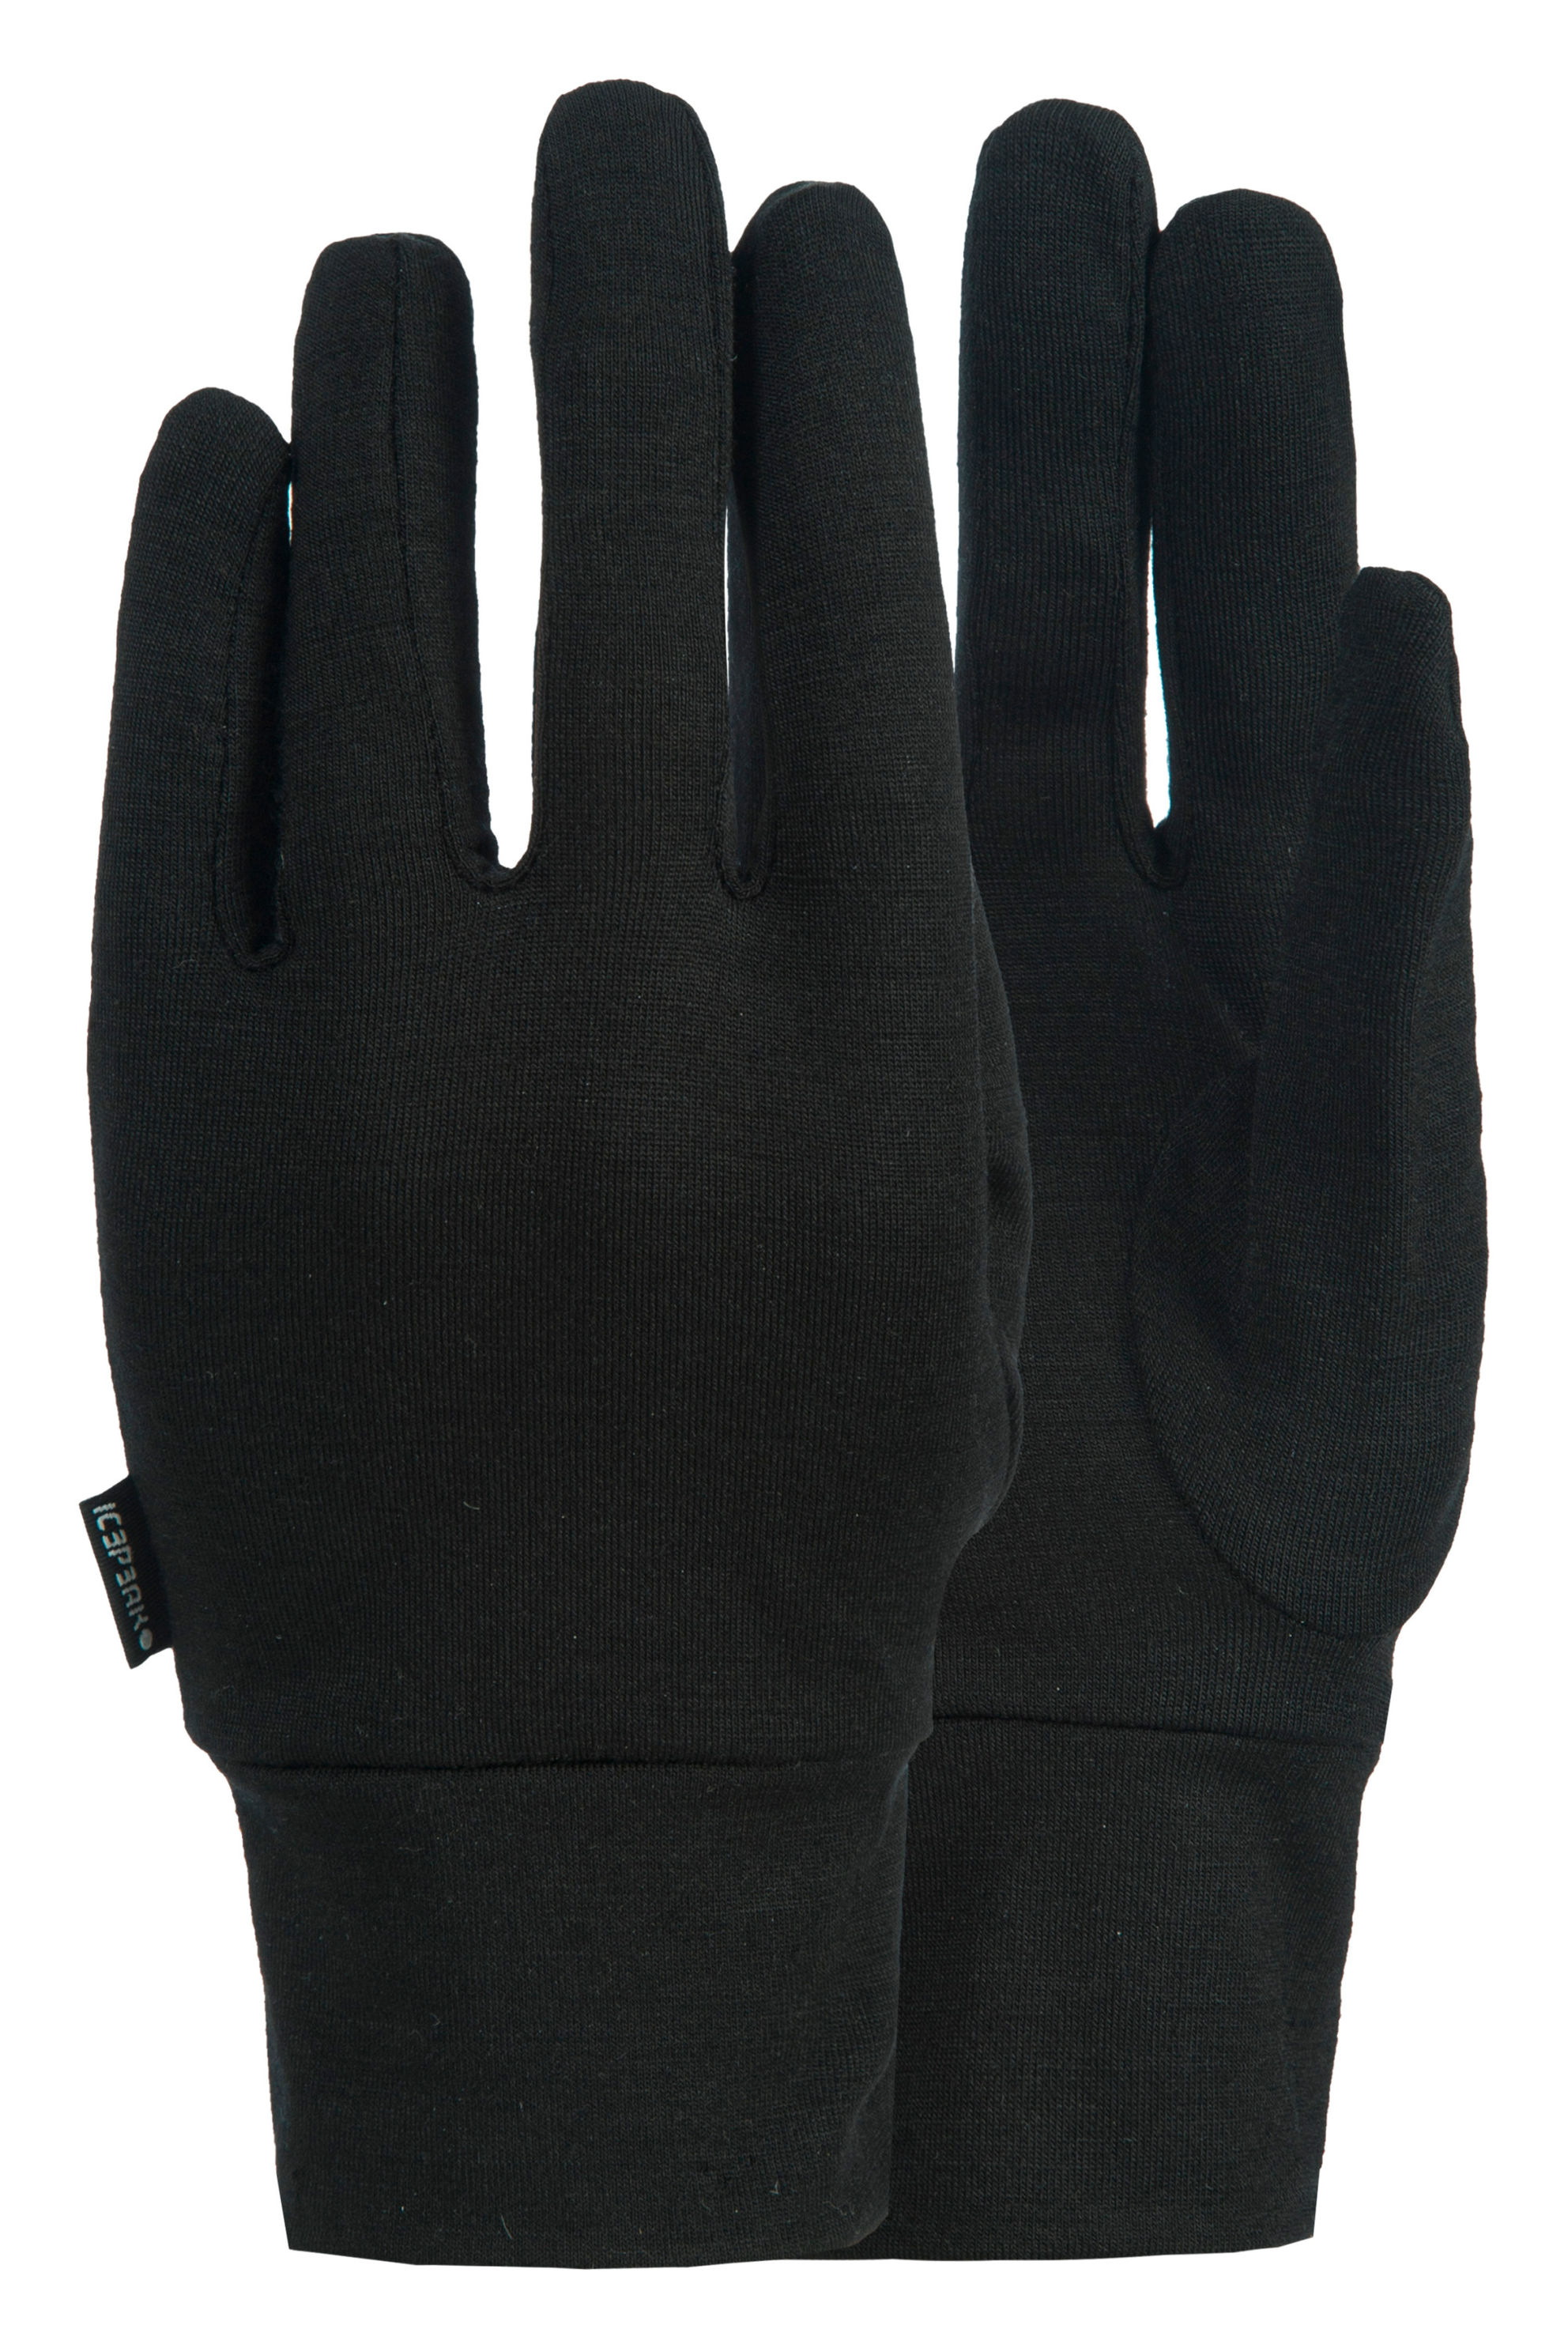 ICEPEAK Merino-Handschuhe HARBERT schwarz Größe: M | Weltbild.de